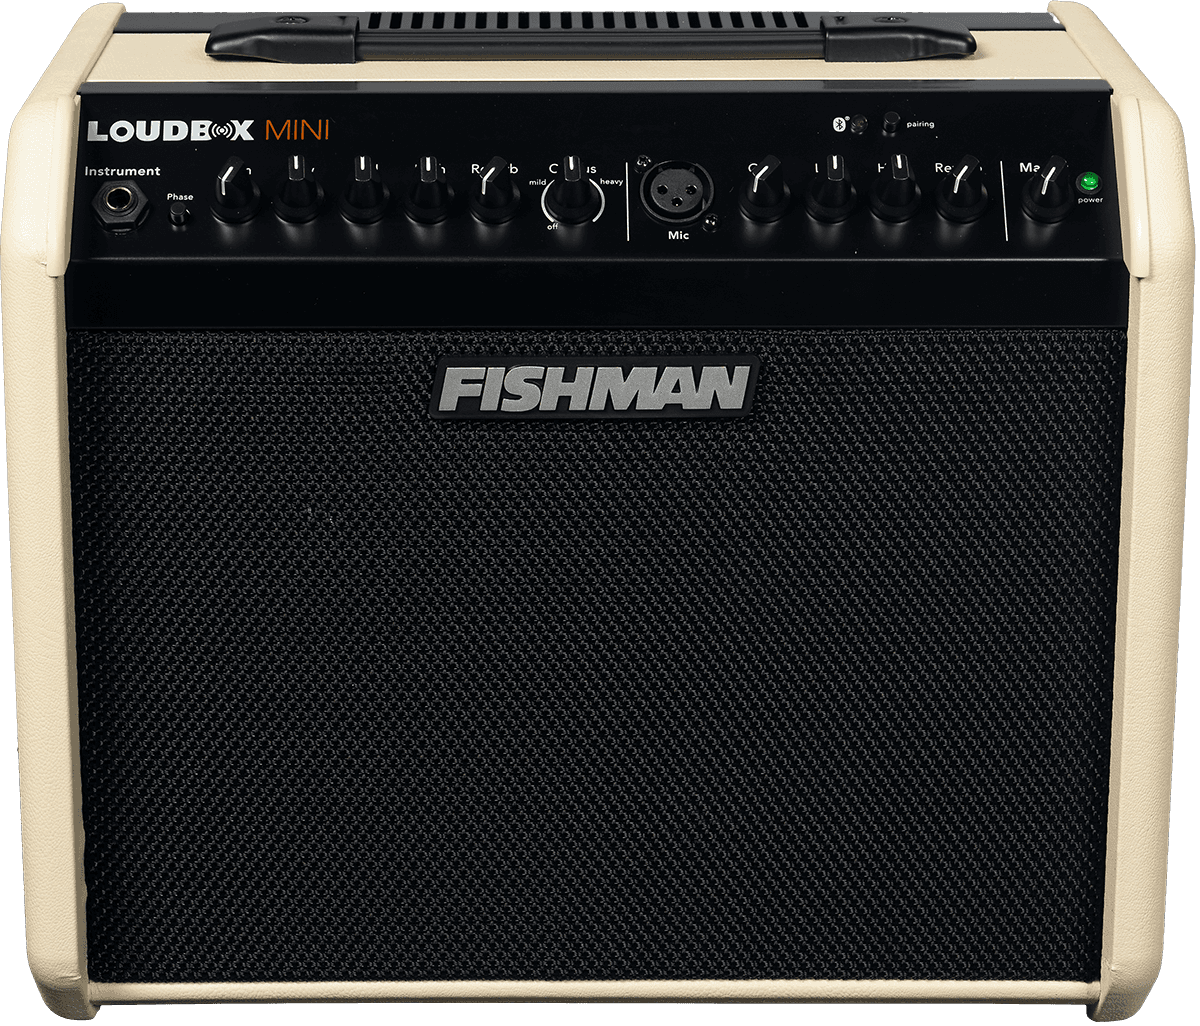 Fishman Loudbox Mini 60w Bluetooth - Cream - Mini Ampli Acoustique - Variation 2